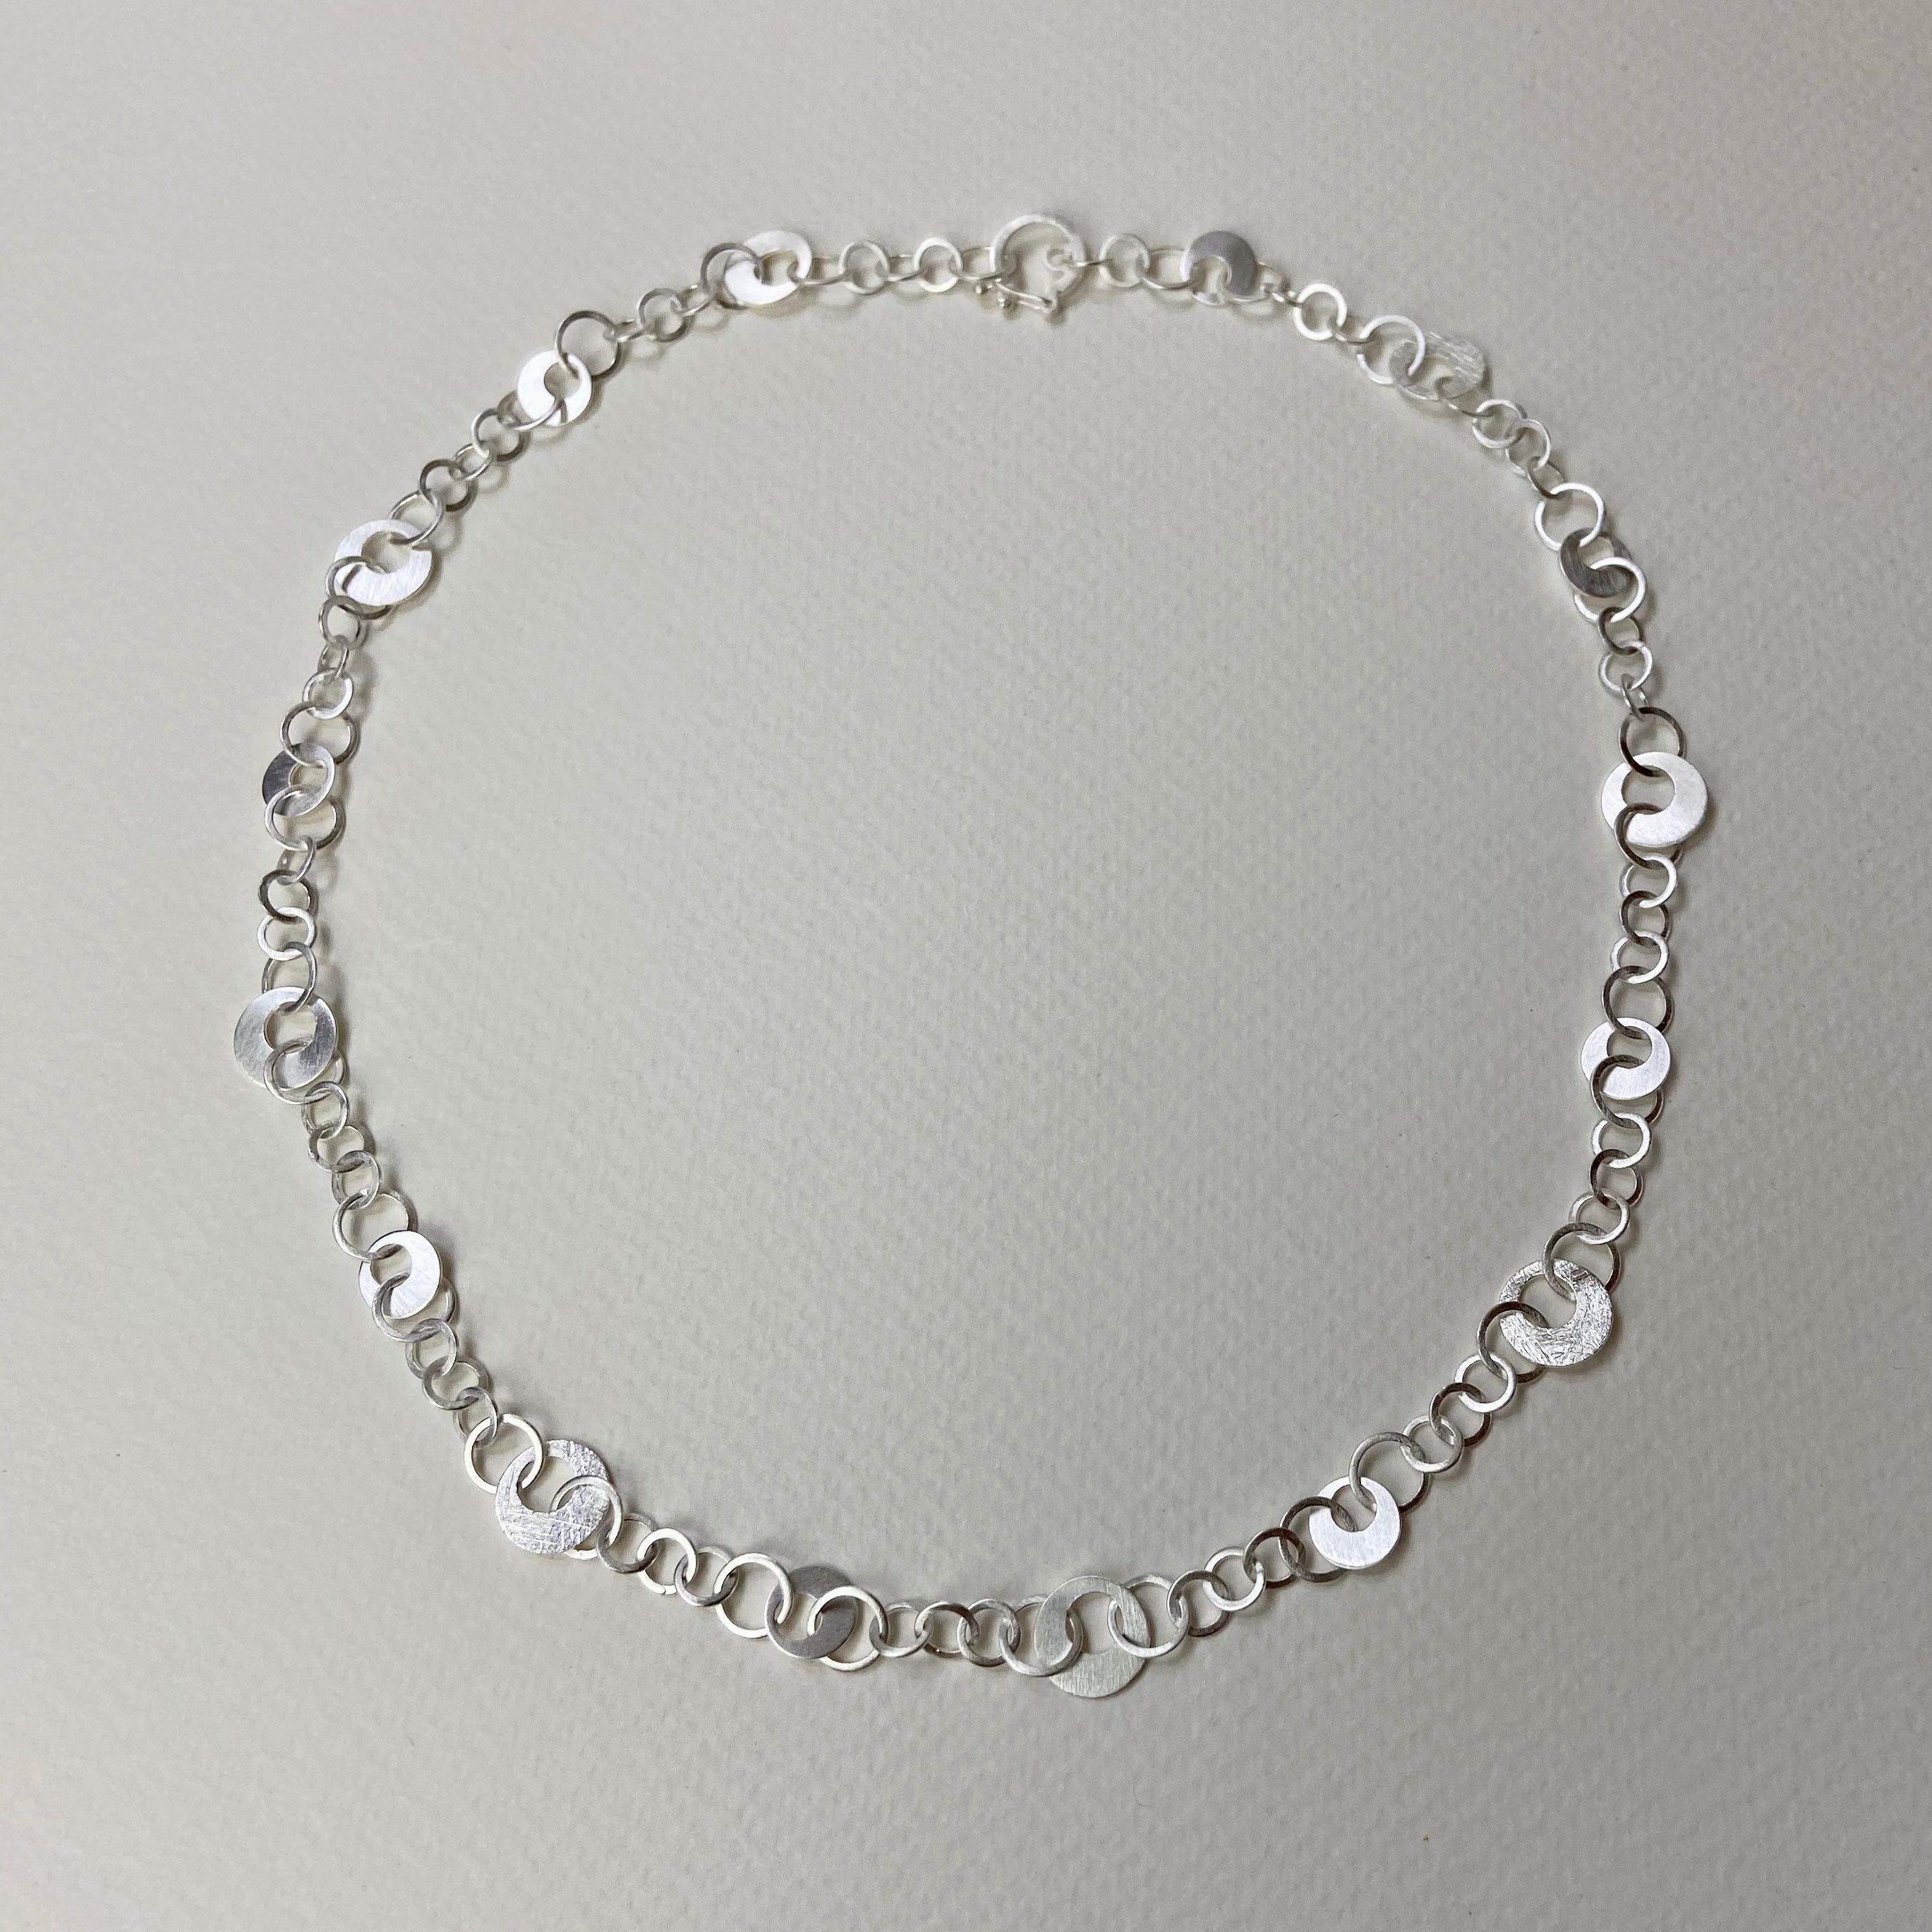 Satin Silver Chain Necklace - The Nancy Smillie Shop - Art, Jewellery & Designer Gifts Glasgow